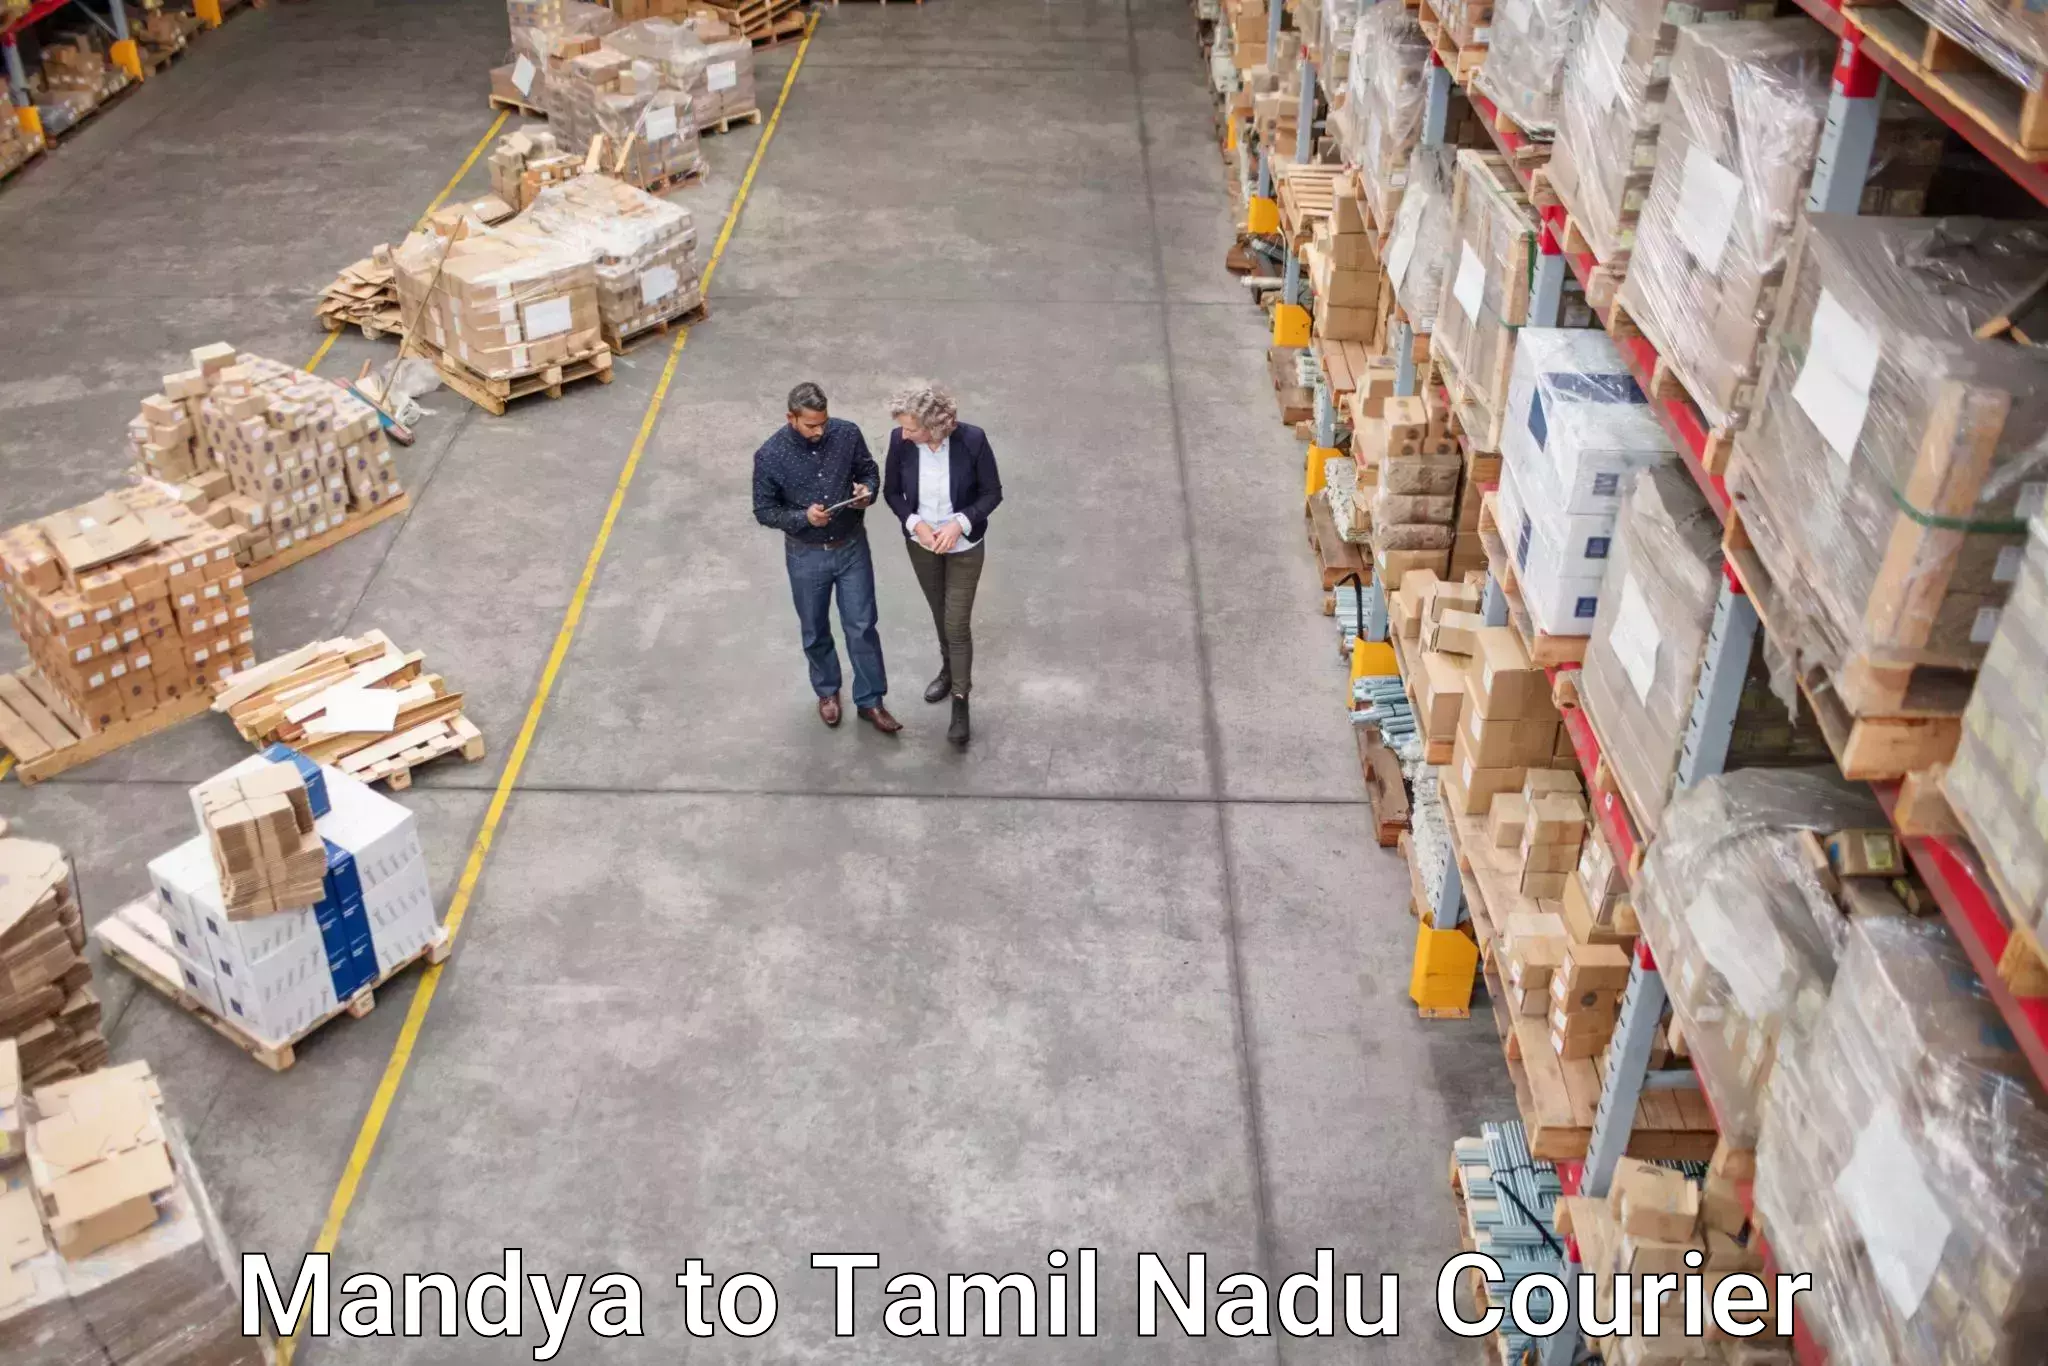 Courier service innovation Mandya to Tamil Nadu